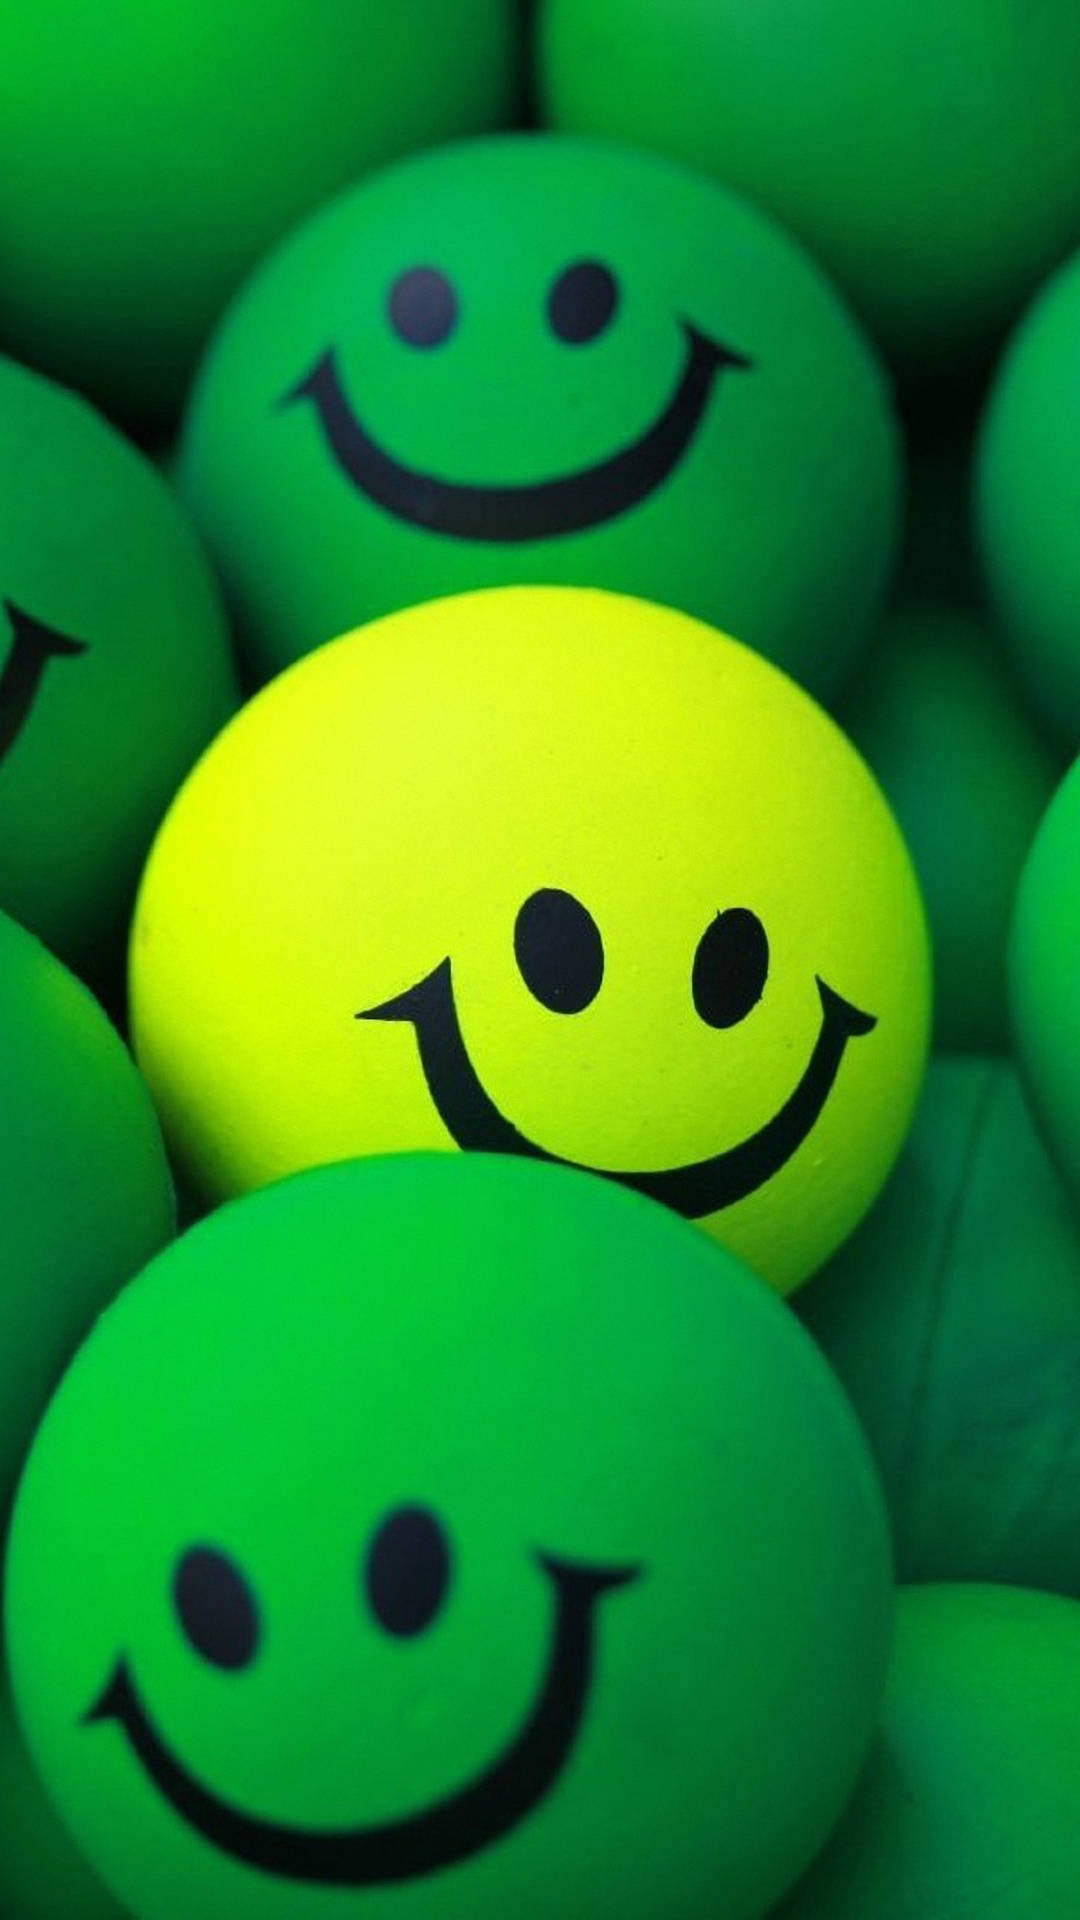 Expressive Yellow Smiley Ball Amongst Green Balls